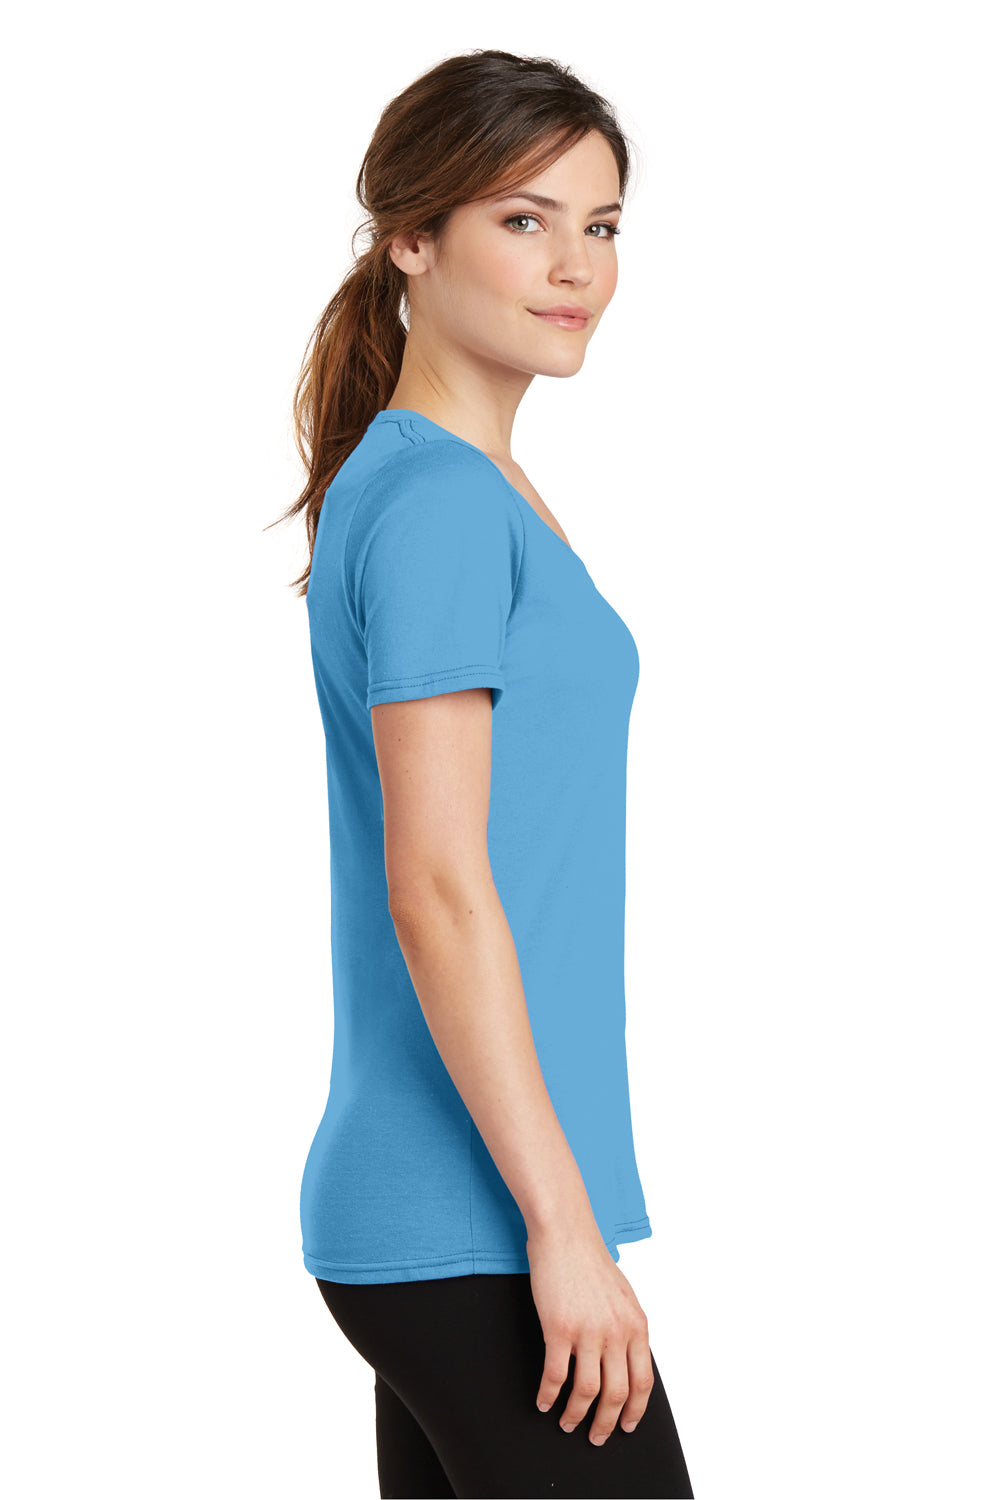 Port & Company LPC381V Womens Dry Zone Performance Moisture Wicking Short Sleeve V-Neck T-Shirt Aqua Blue Side